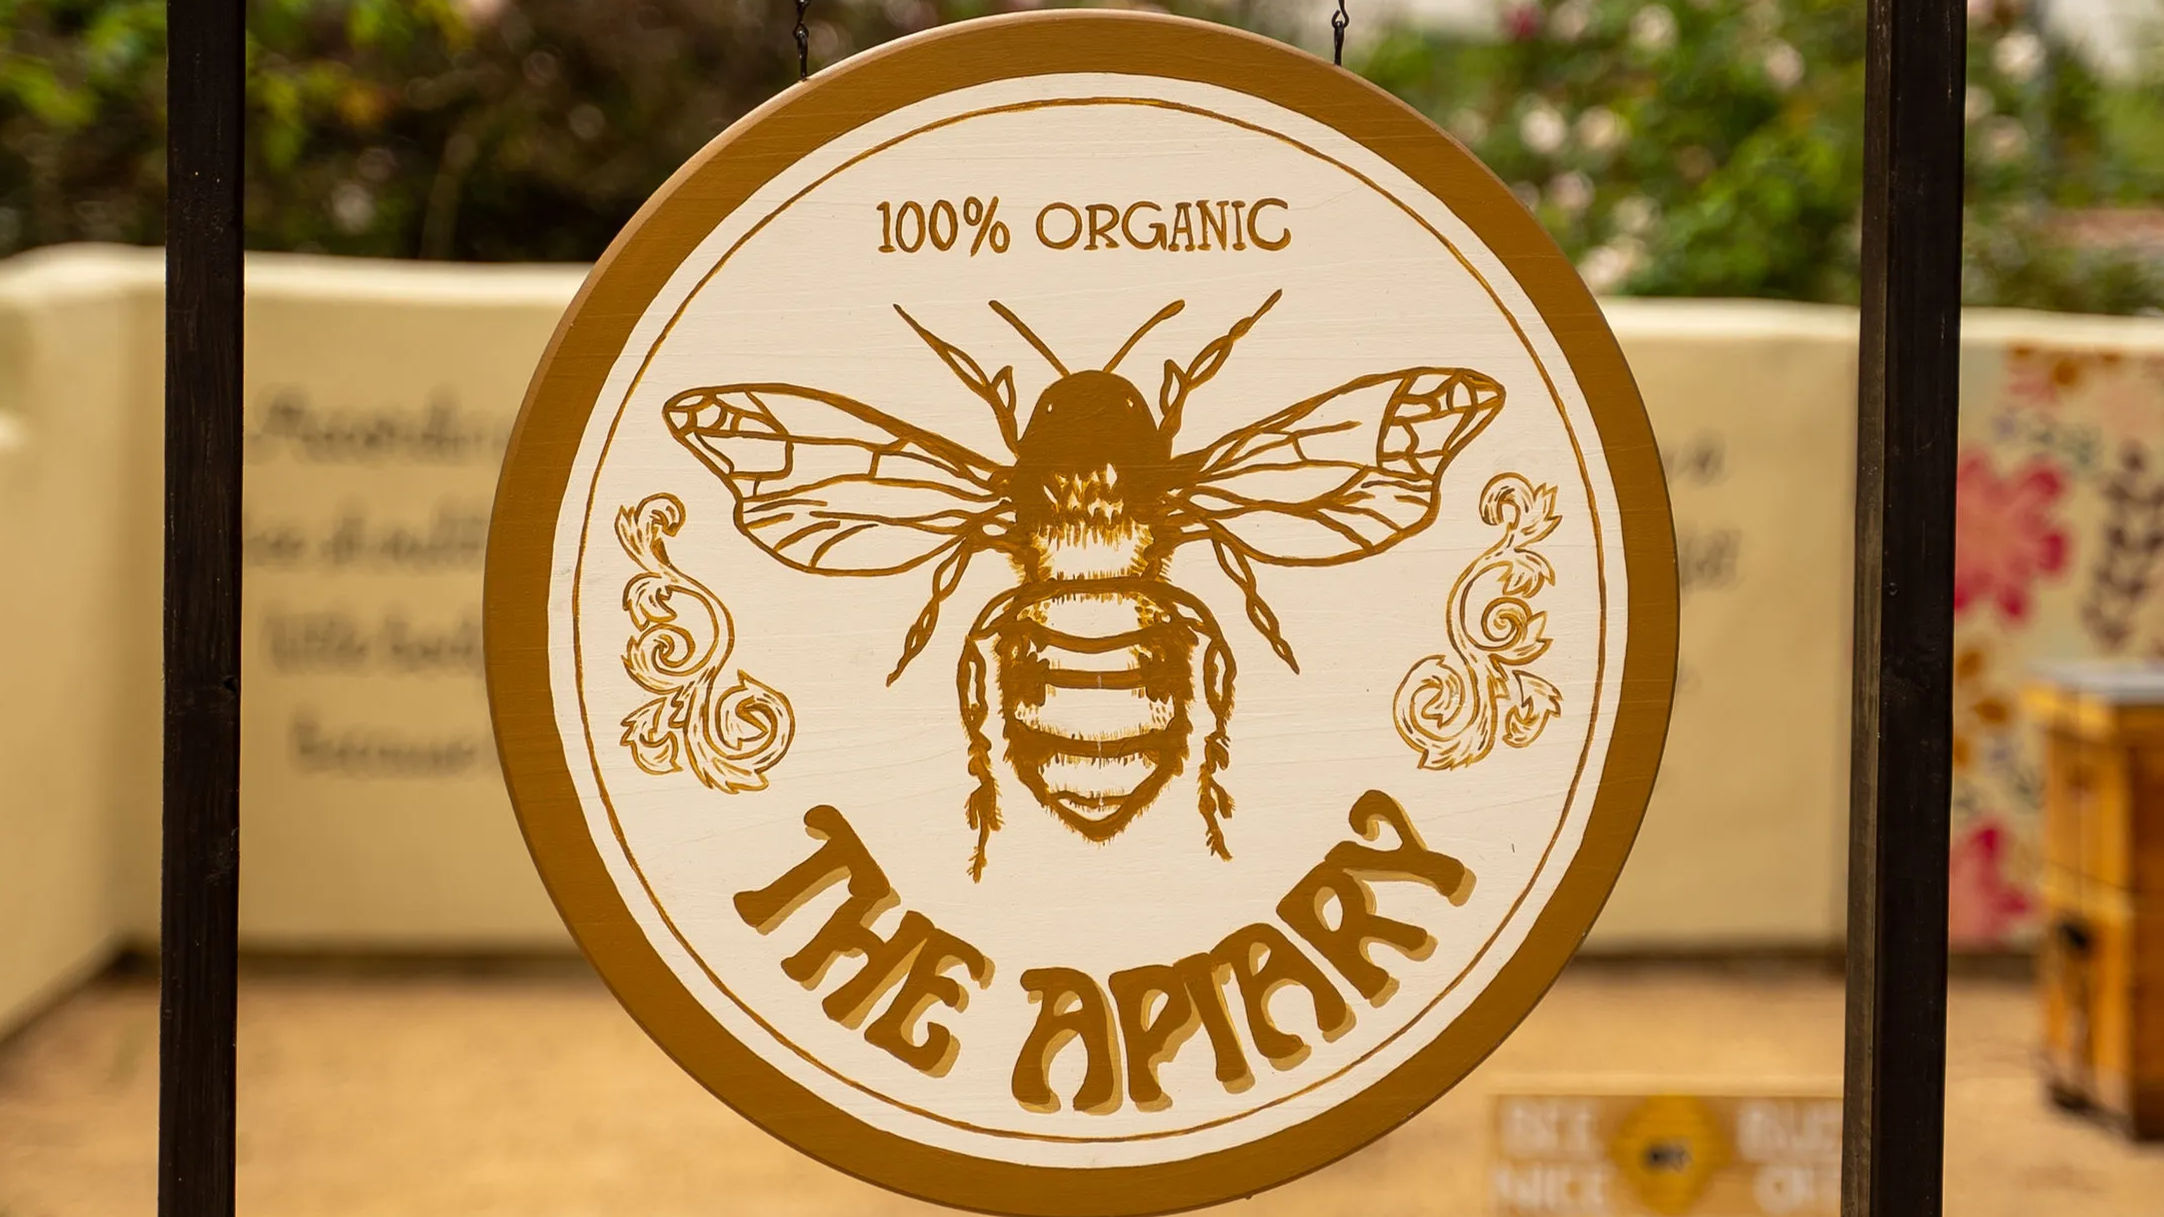 Honey bee: a Vital Pollinator and Garden Guest